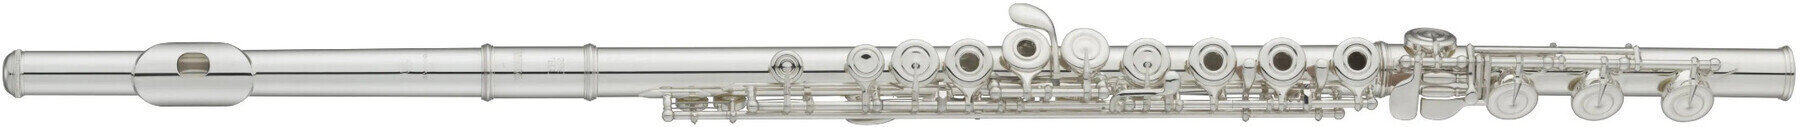 Concert flute Avanti 1000BEA Concert flute